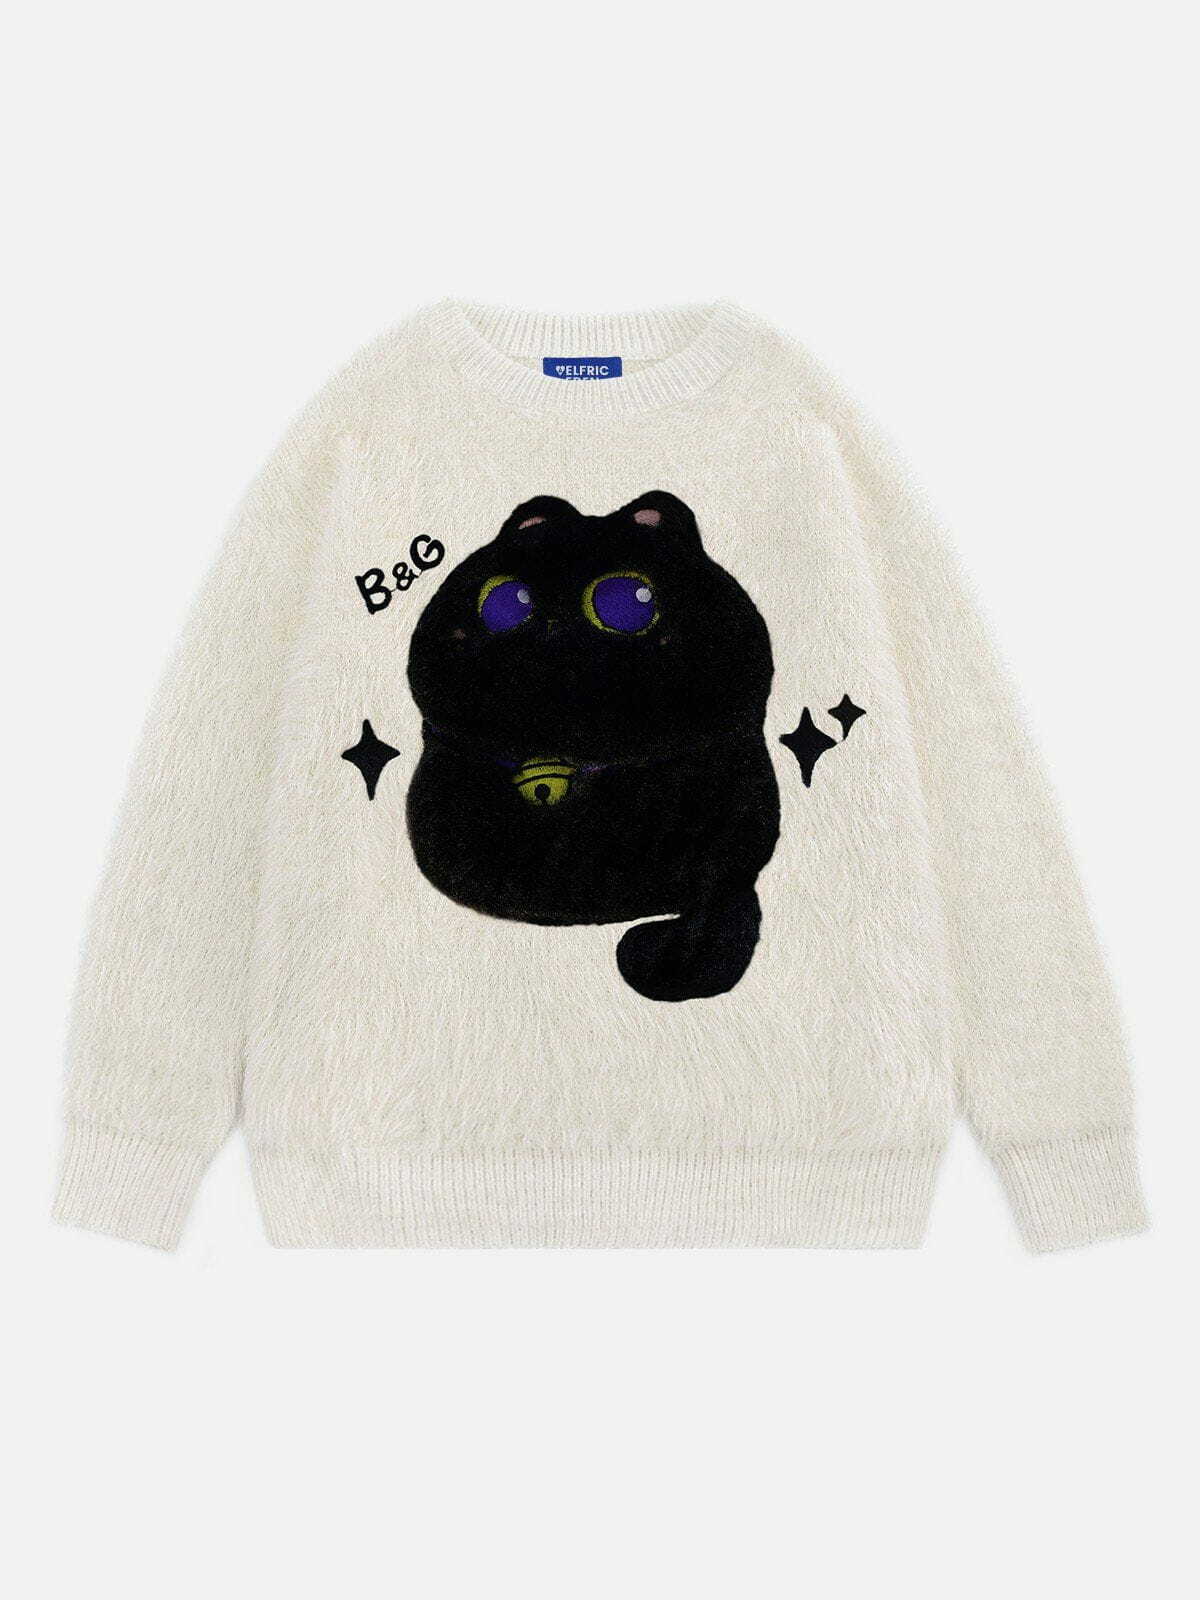 retro cartoon cat sweater edgy & vibrant streetwear 4632